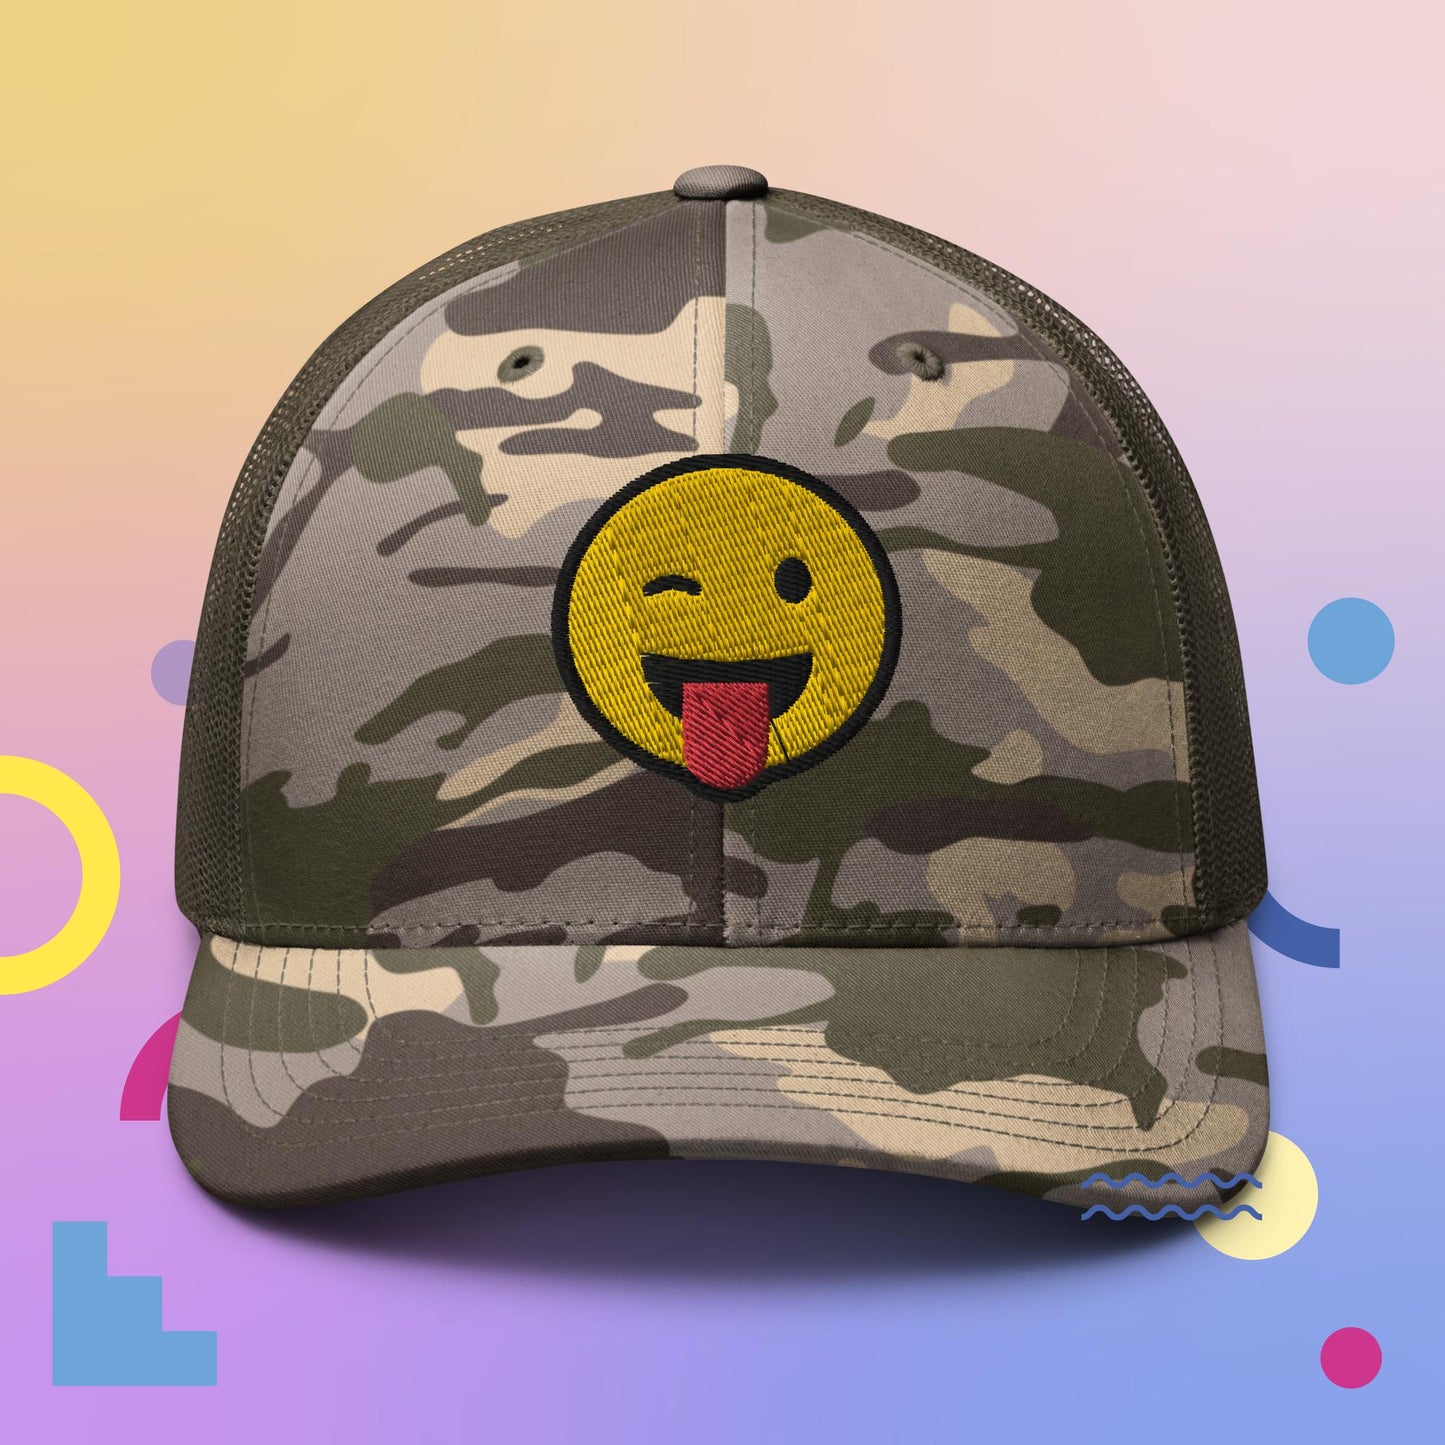 Smiley Wink Camouflage trucker hat